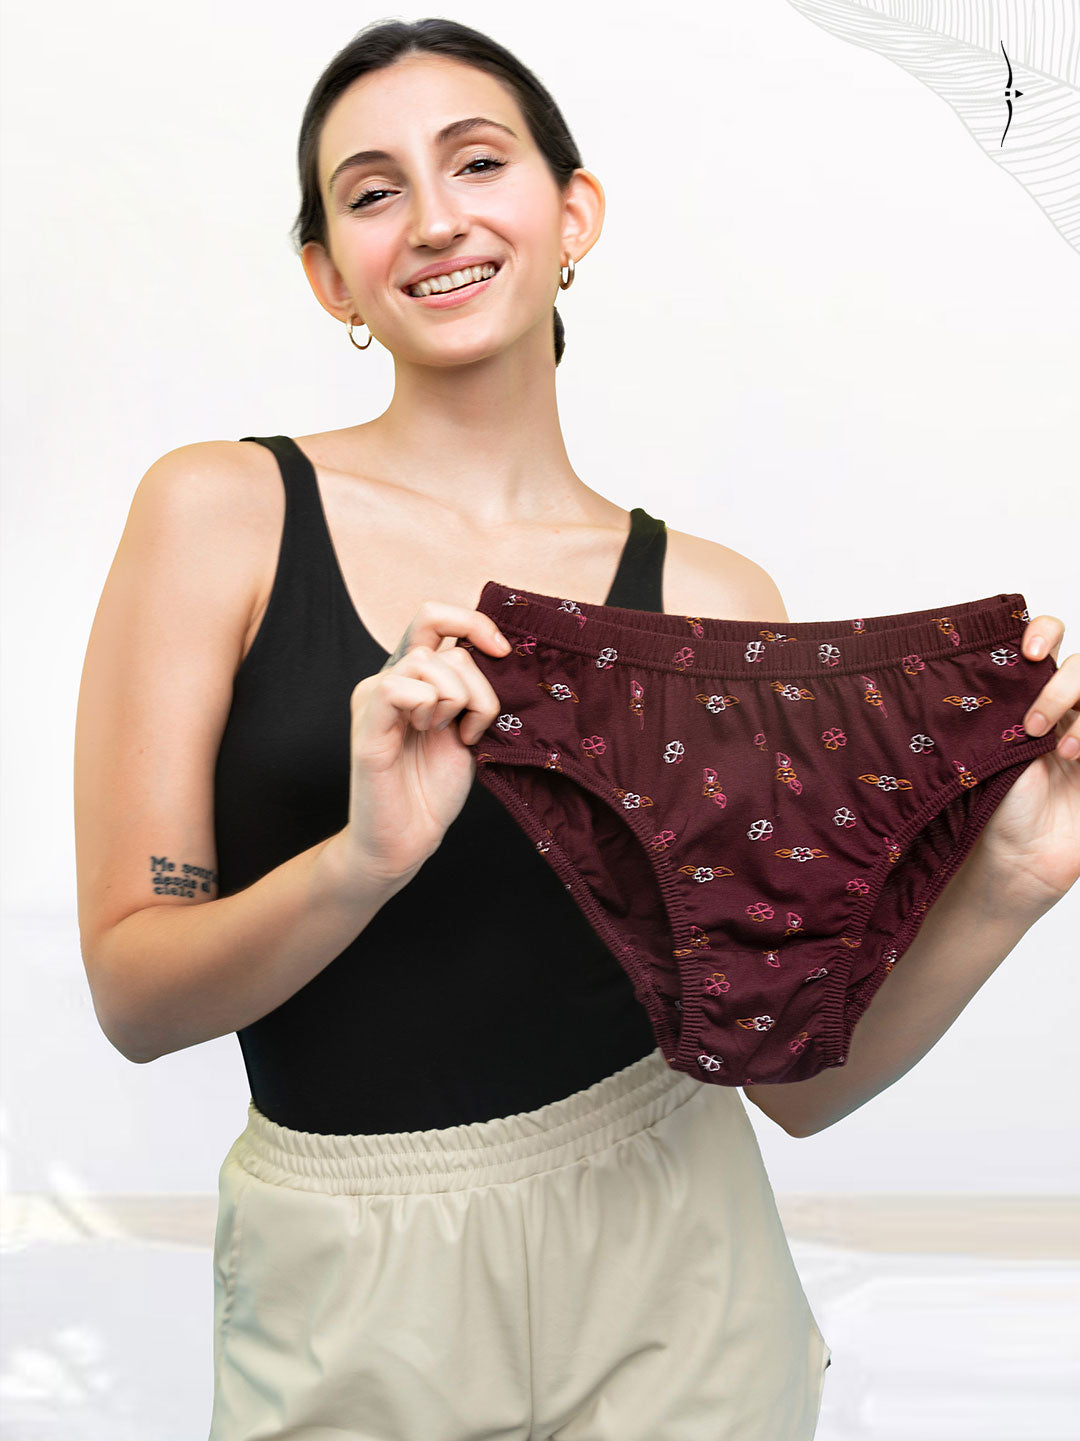 Ladies Essa Printed Cotton Panty Size: S - Xxxl at Best Price in